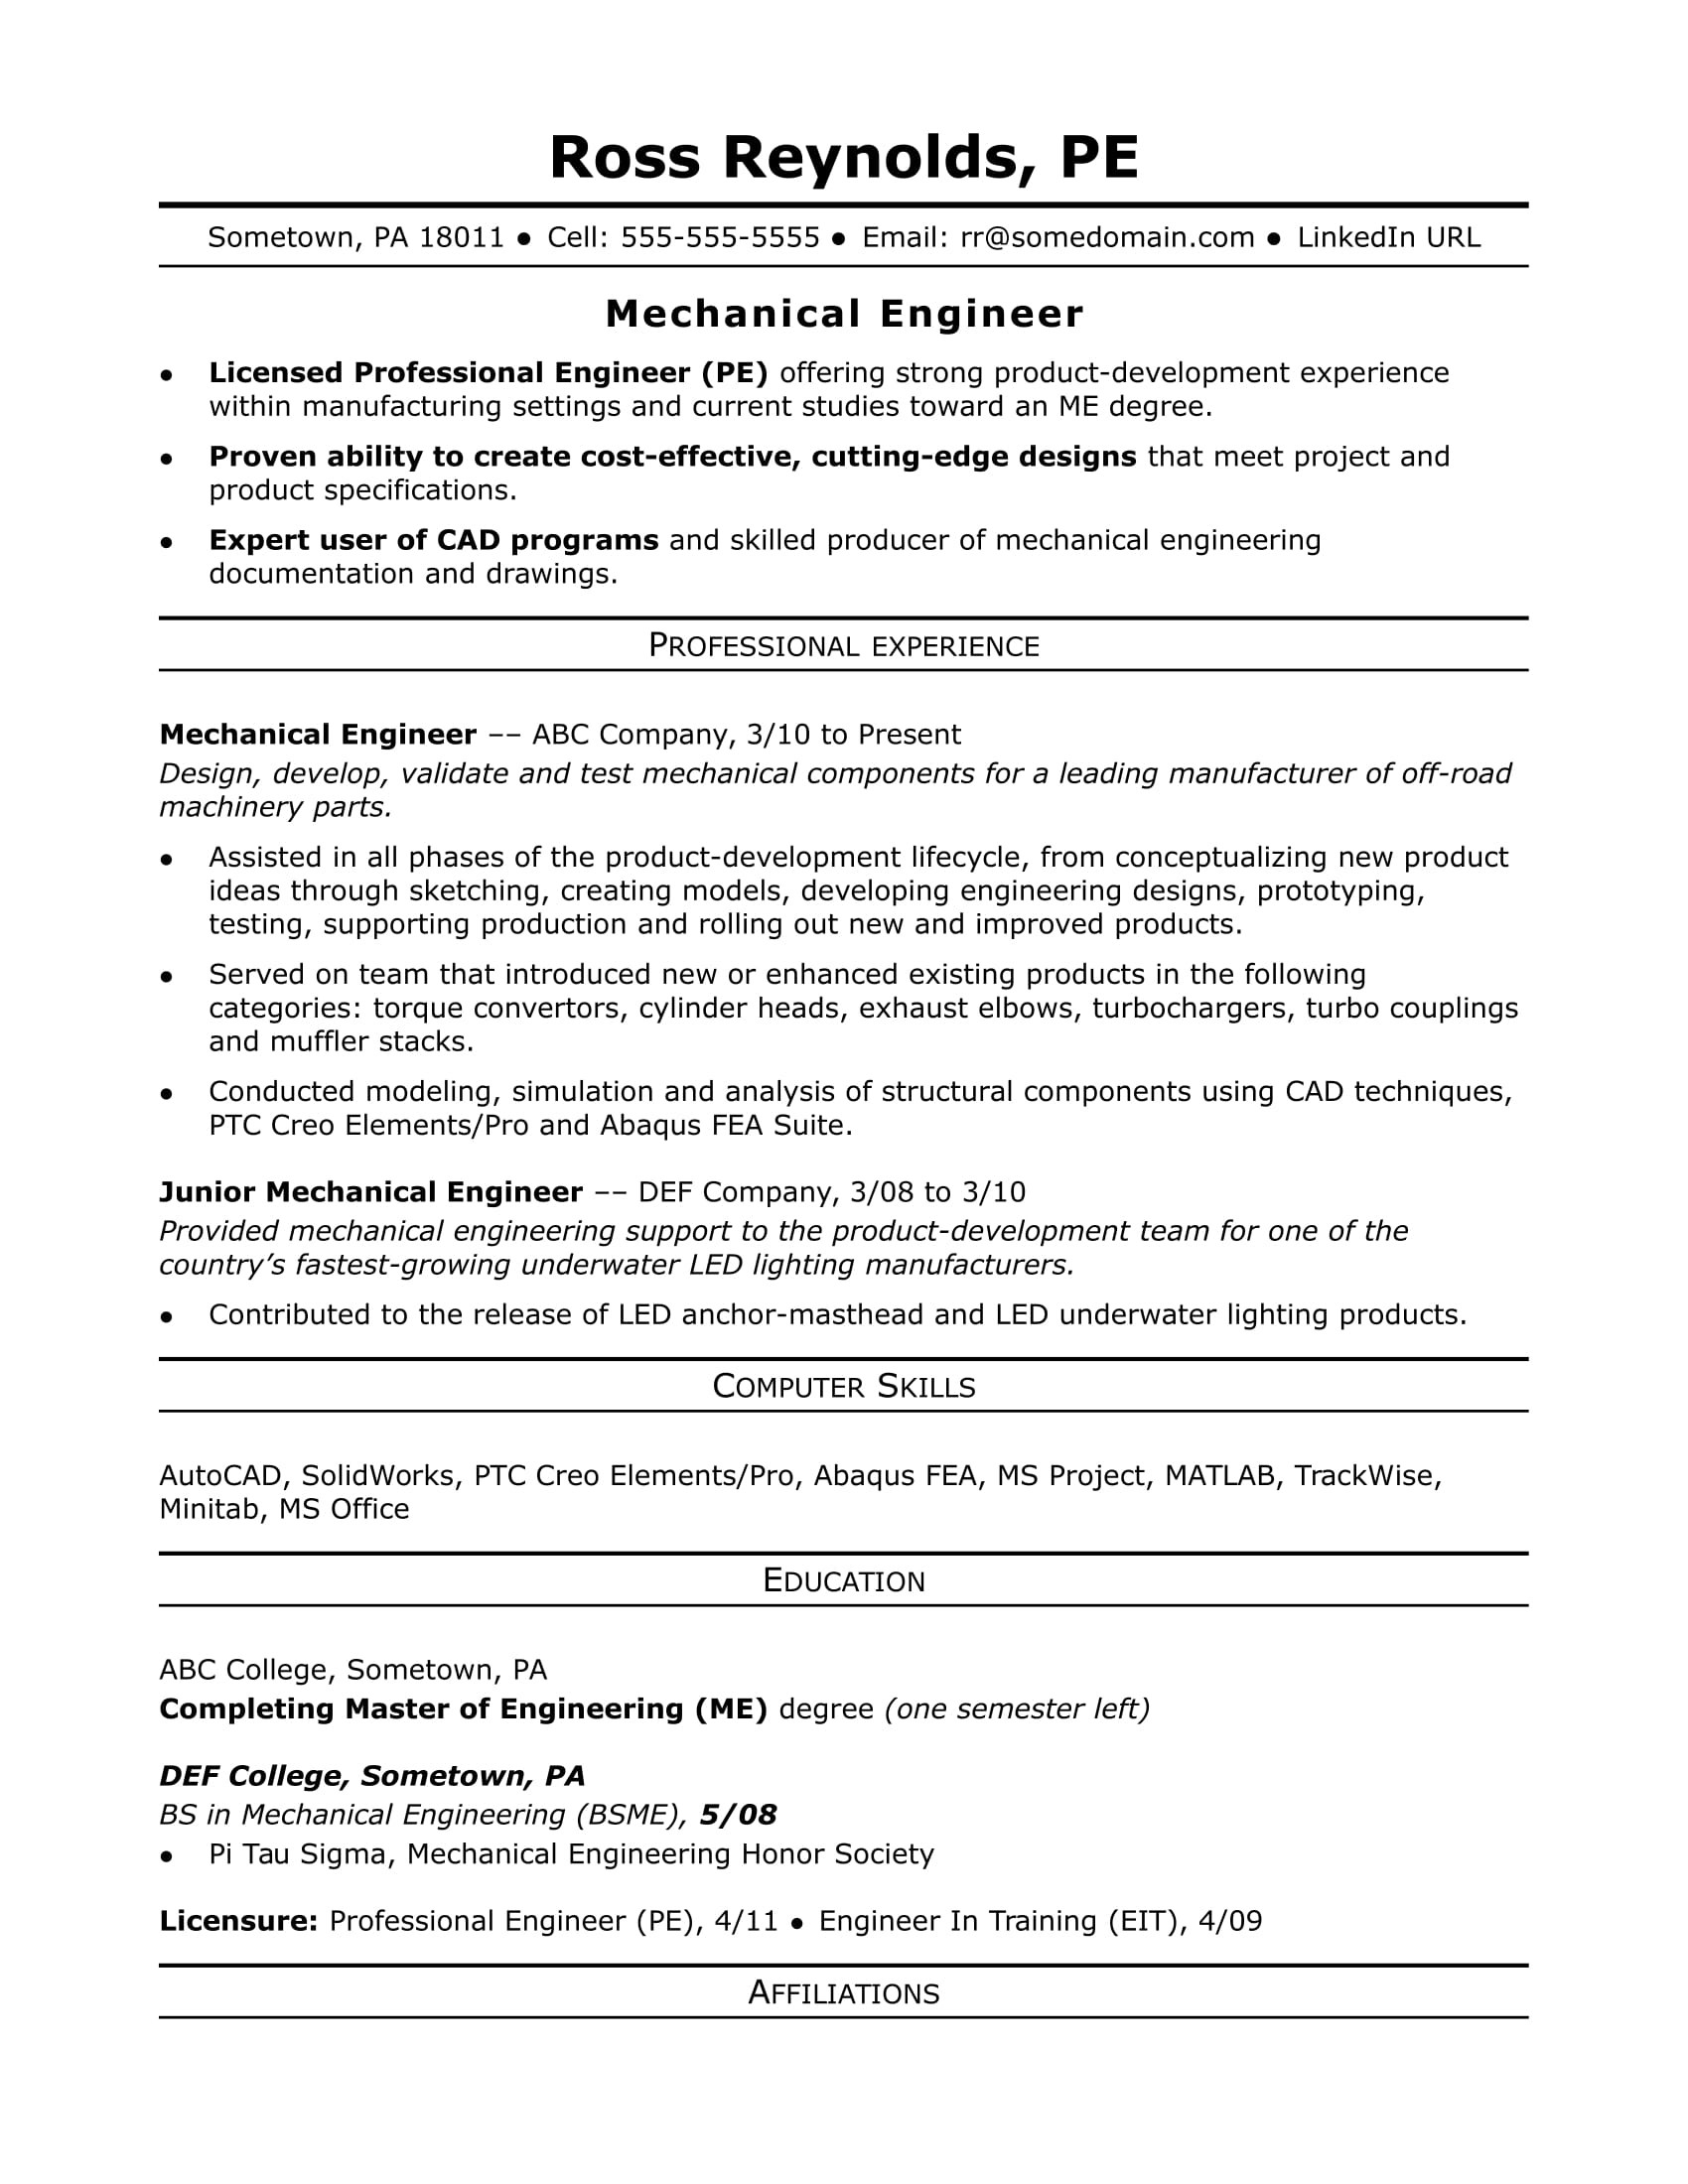 Sample Resumes for Mechanical Engineer Jobs Sample Resume for A Midlevel Mechanical Engineer Monster.com